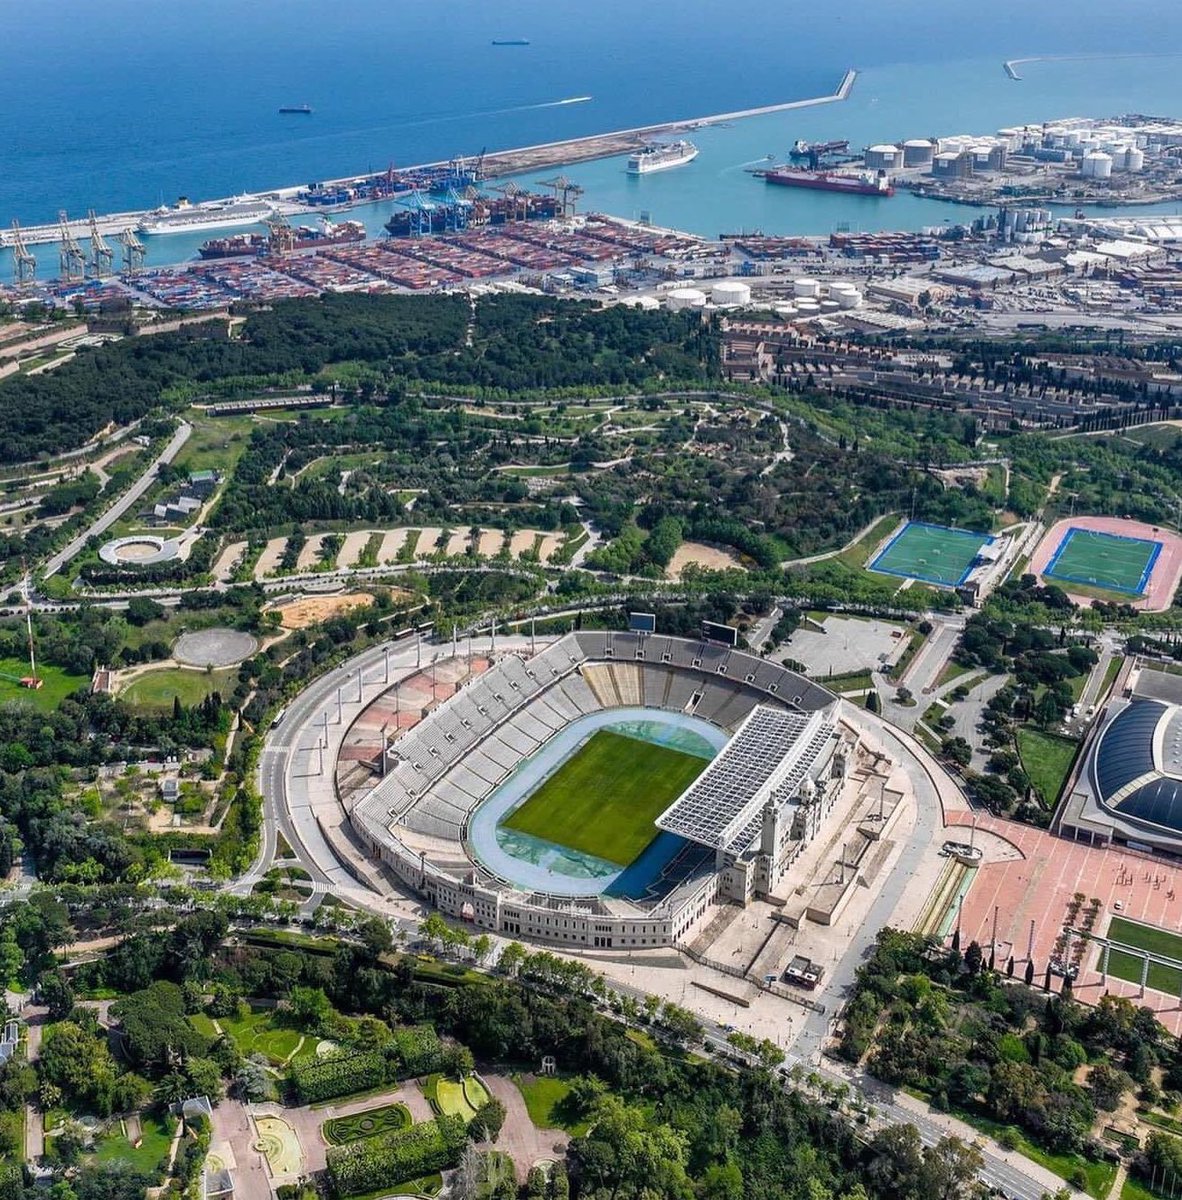 The Estadi Olímpic Lluís Companys is set to host its first La Liga season since 2008-09 campaign